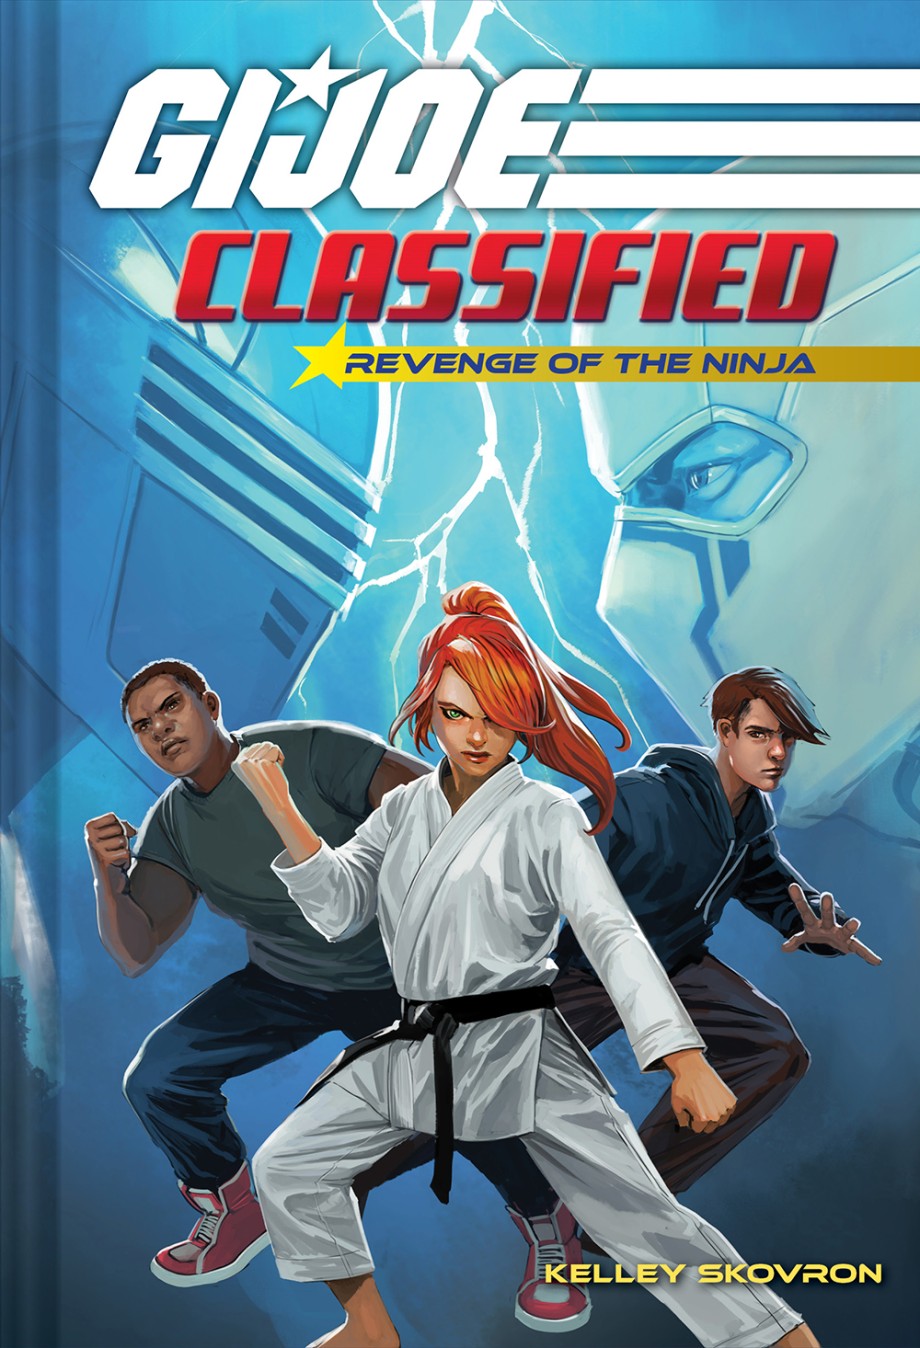 Revenge of the Ninja (G.I. Joe Classified Book Two) (Hardcover)